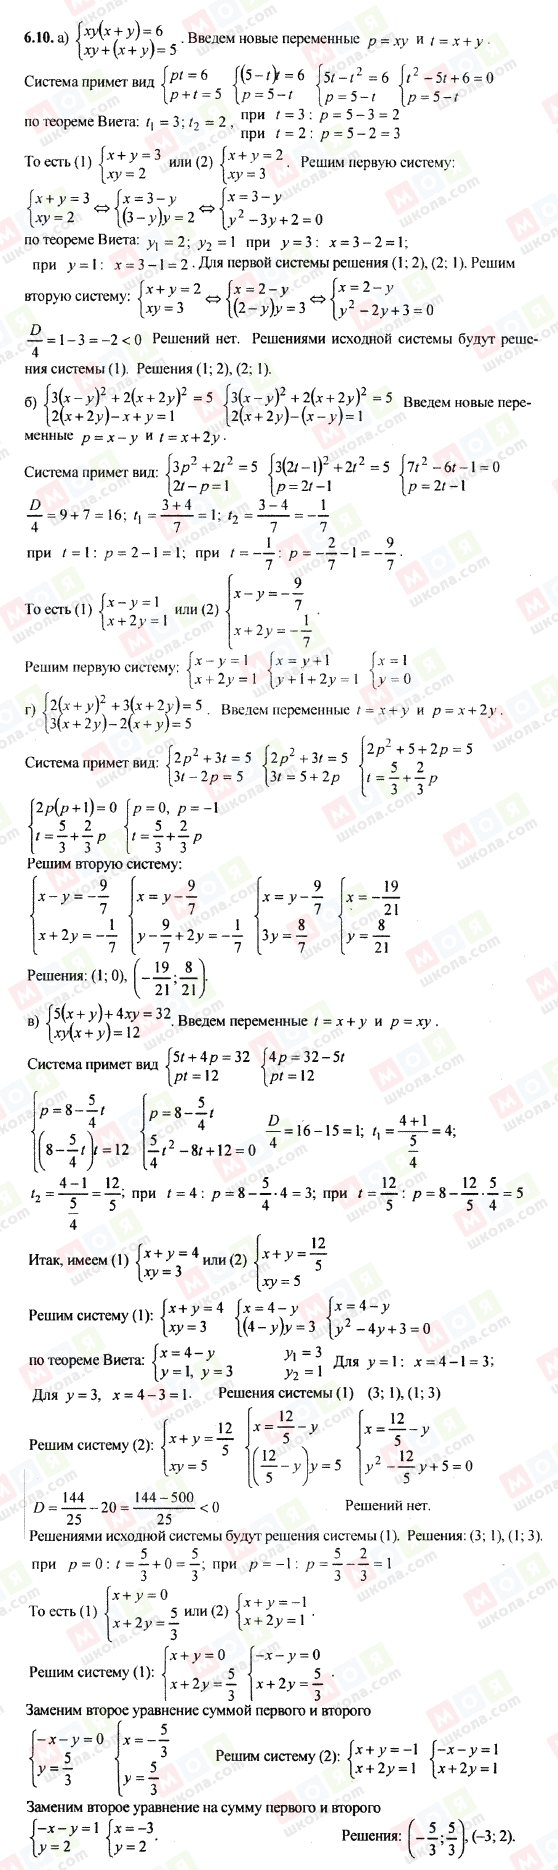 ГДЗ Алгебра 9 клас сторінка 6.10